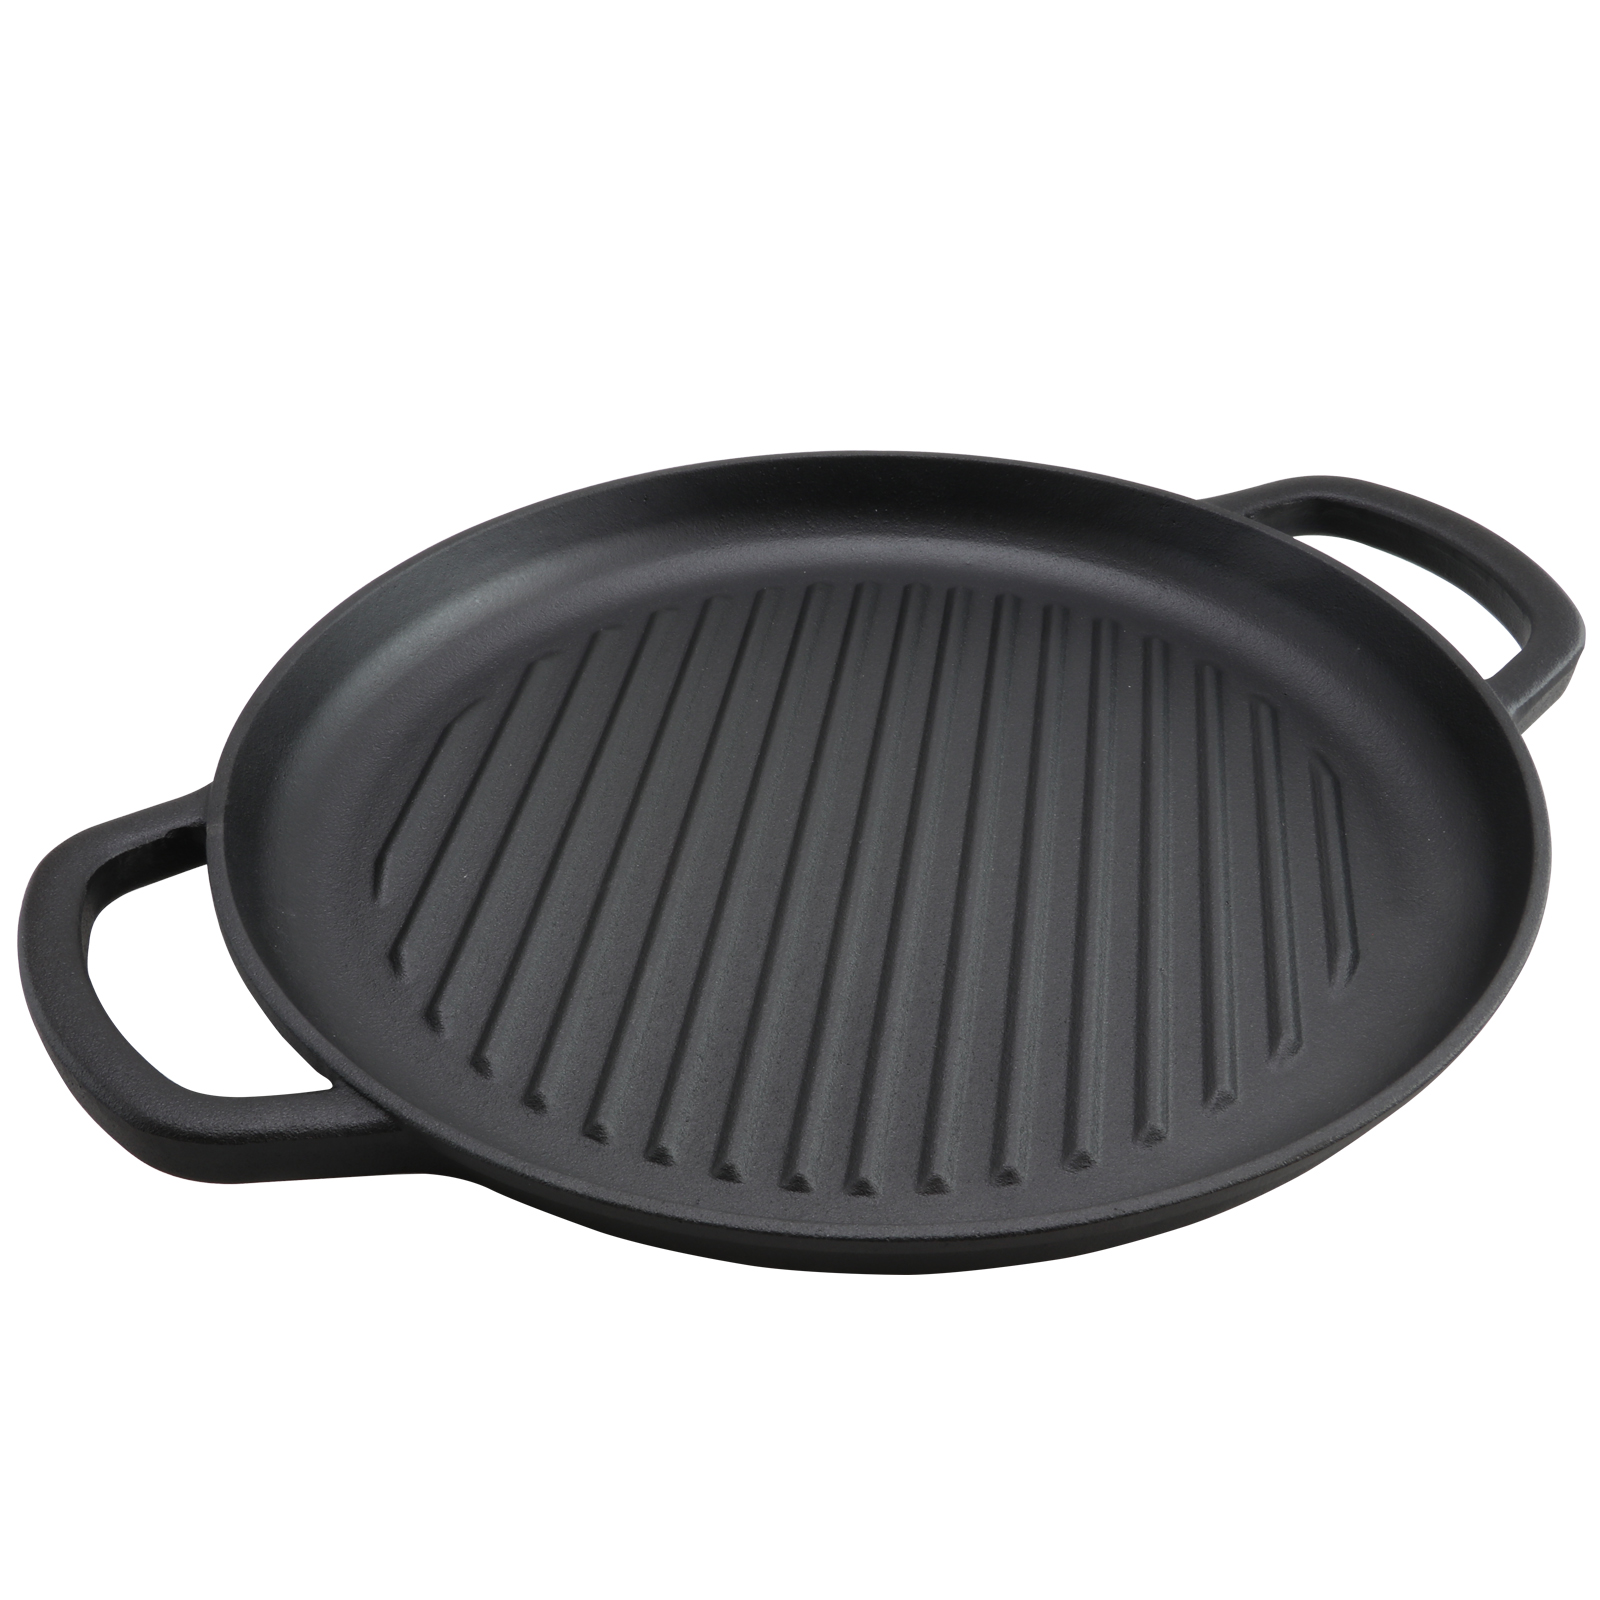 Crock-Pot Artisan 13 inch Round Cast Iron Grill Pan